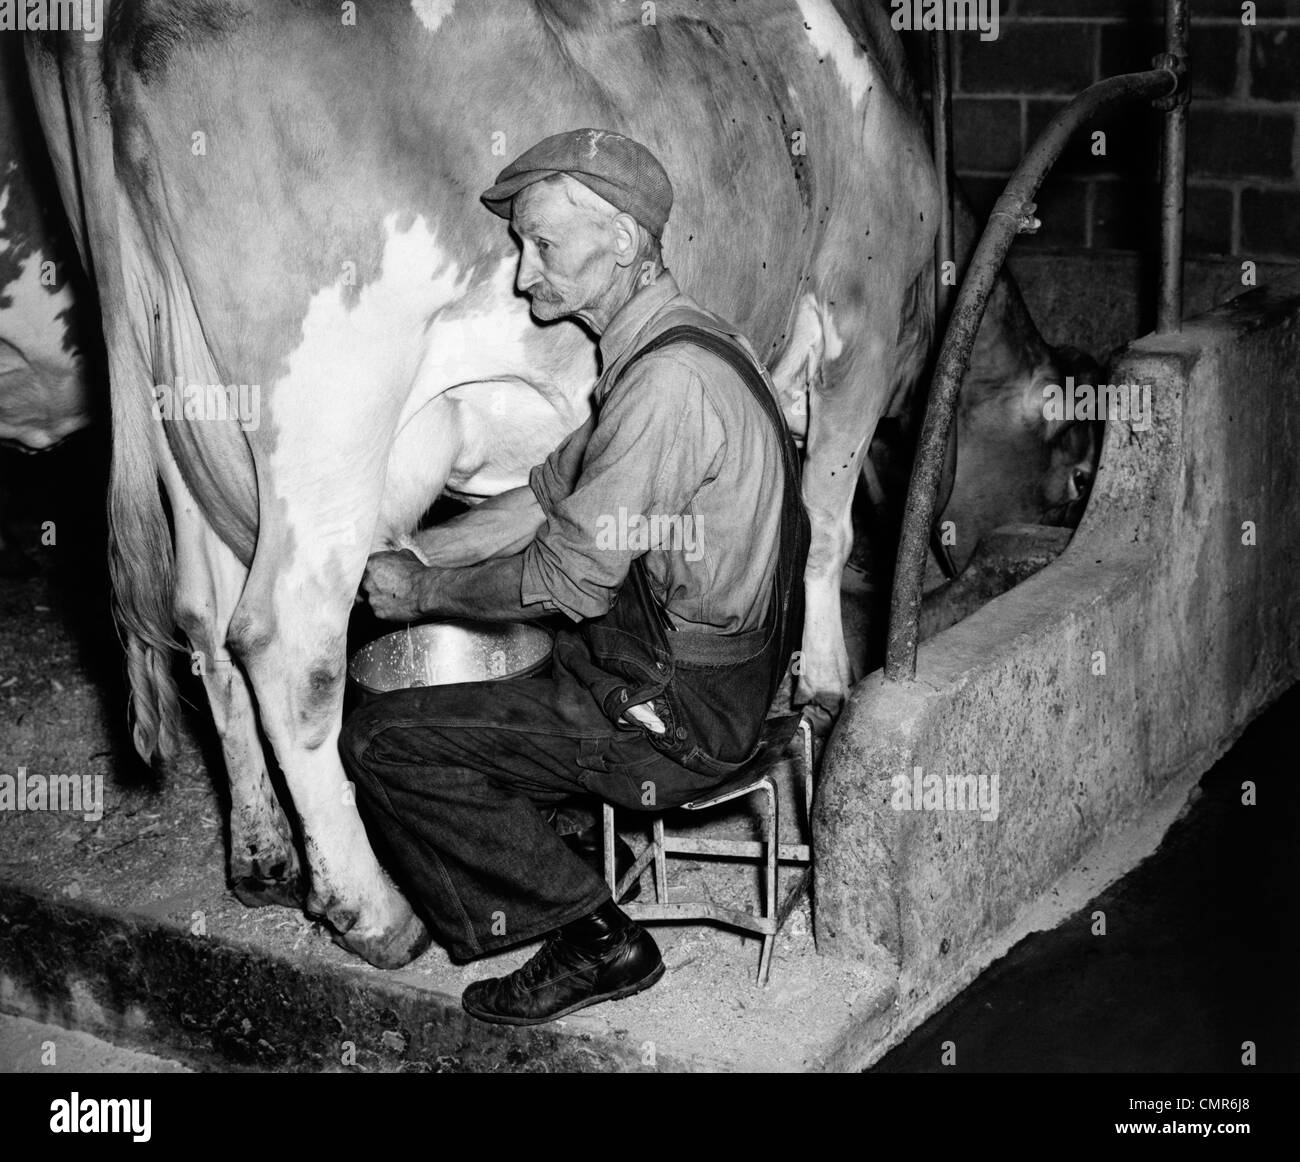 1930s 1940s ELDERLY FARMER IN OVERALLS MILKING GUERNSEY COW Stock Photo